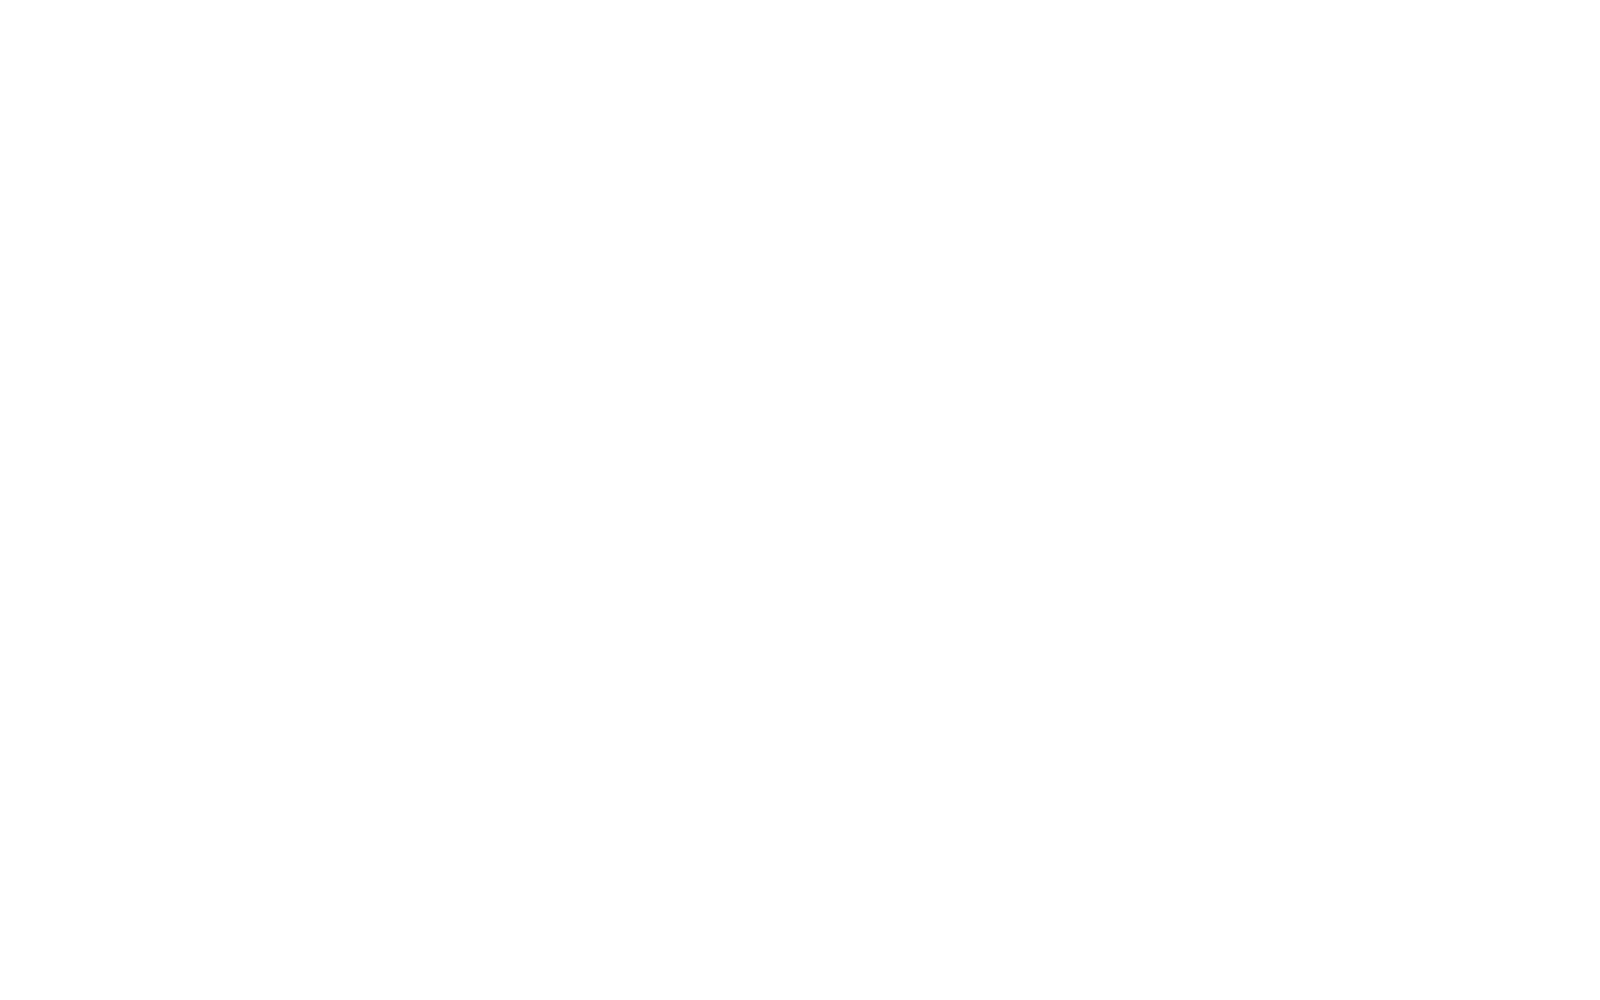 Visit Idaho logo